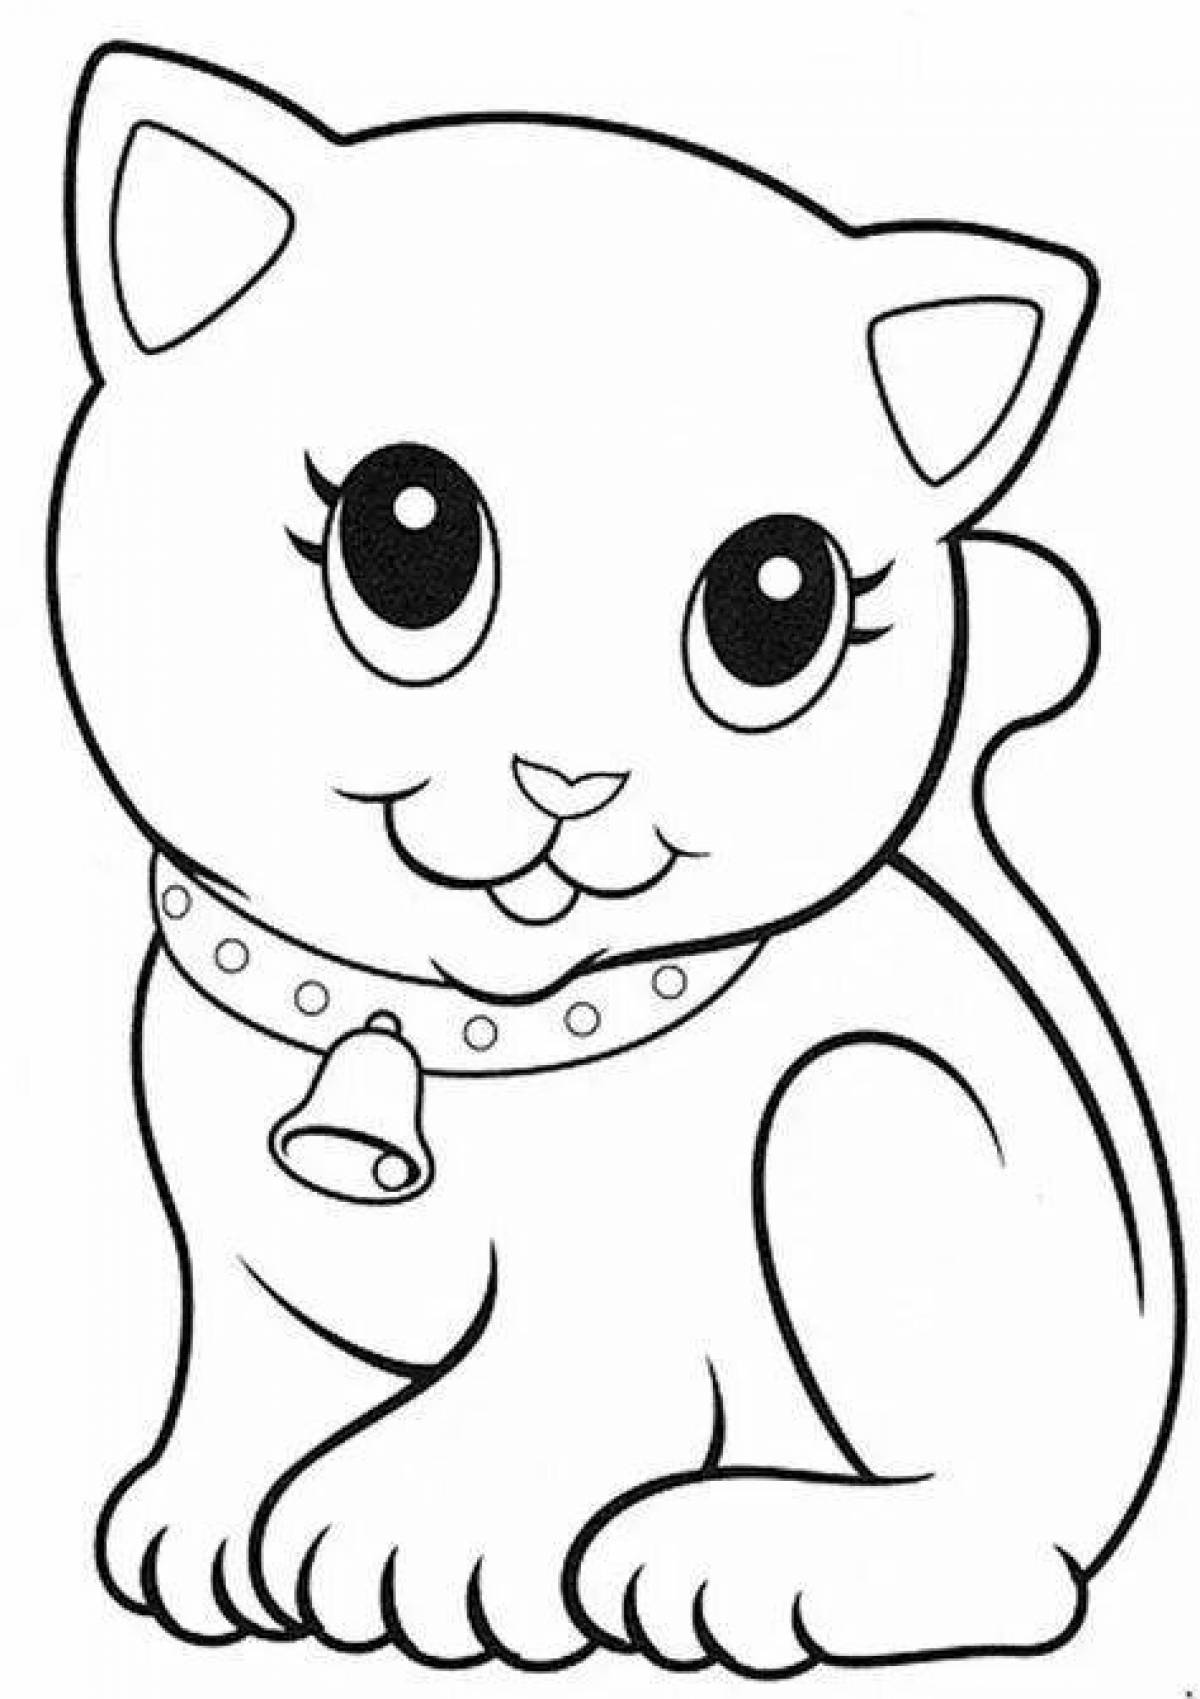 Joyful lily kitty coloring page